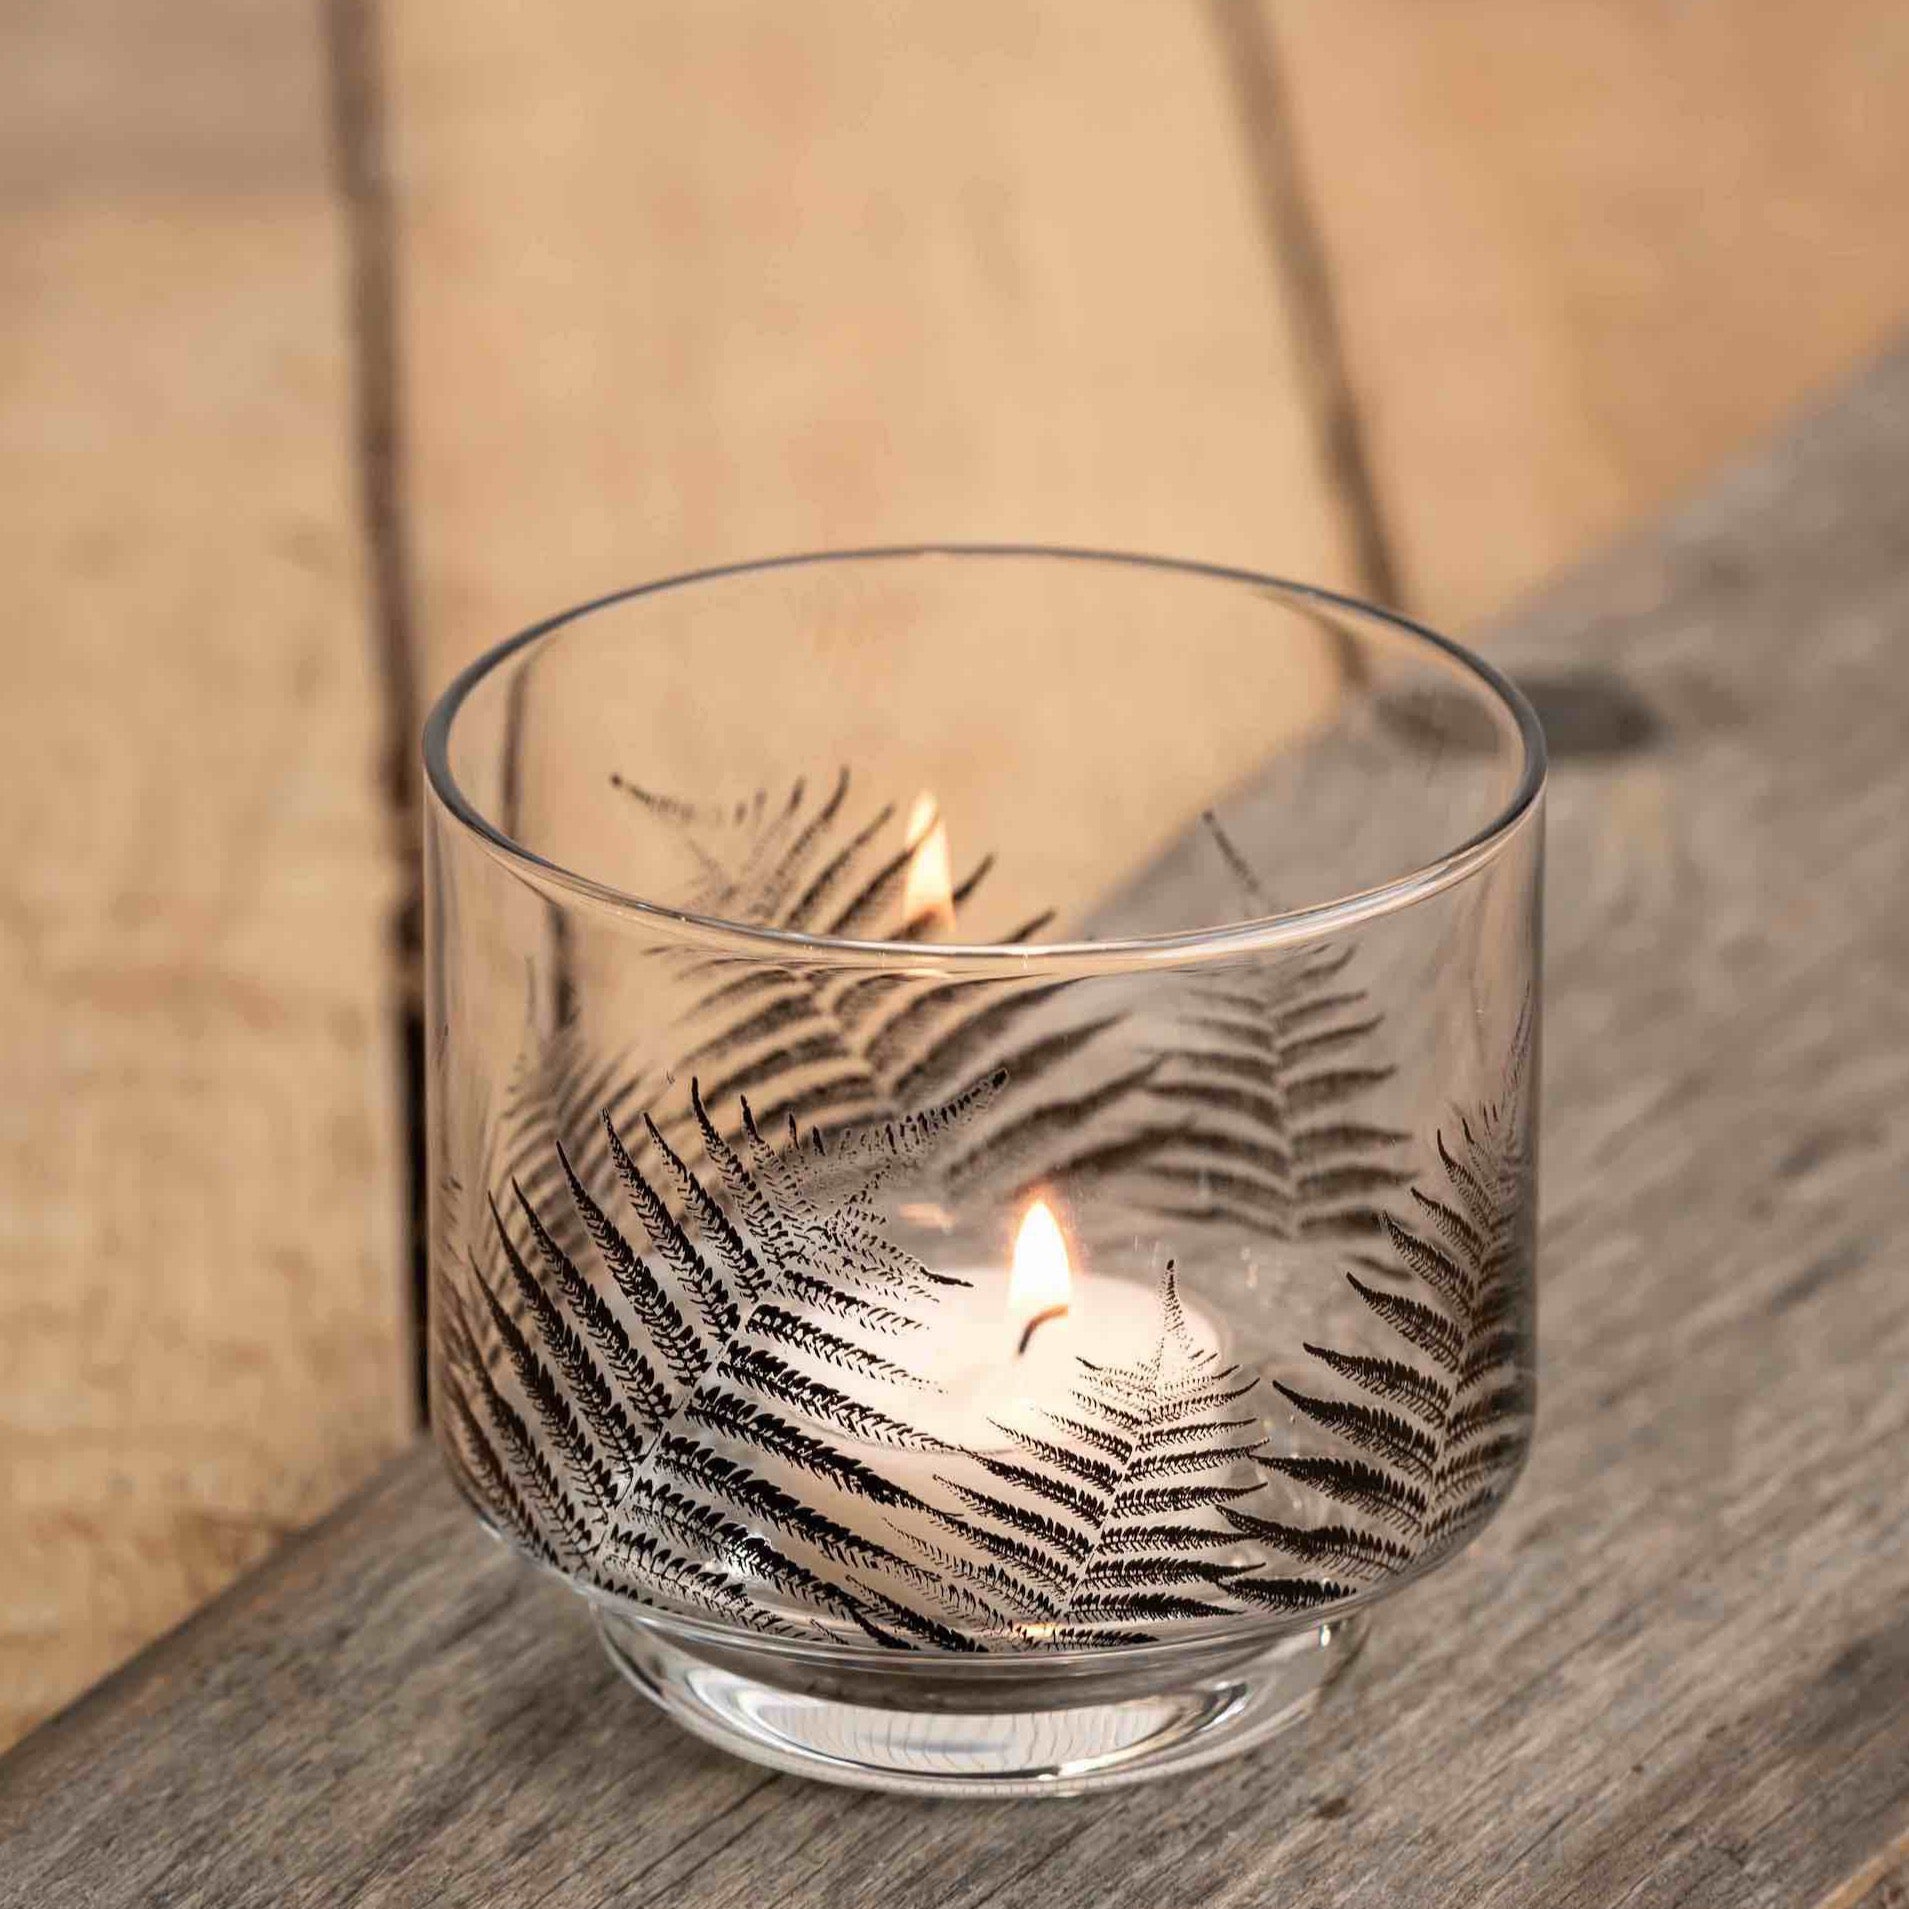 Muurla Nordic The Fern Candle Holder / Bowl with tea light burning inside